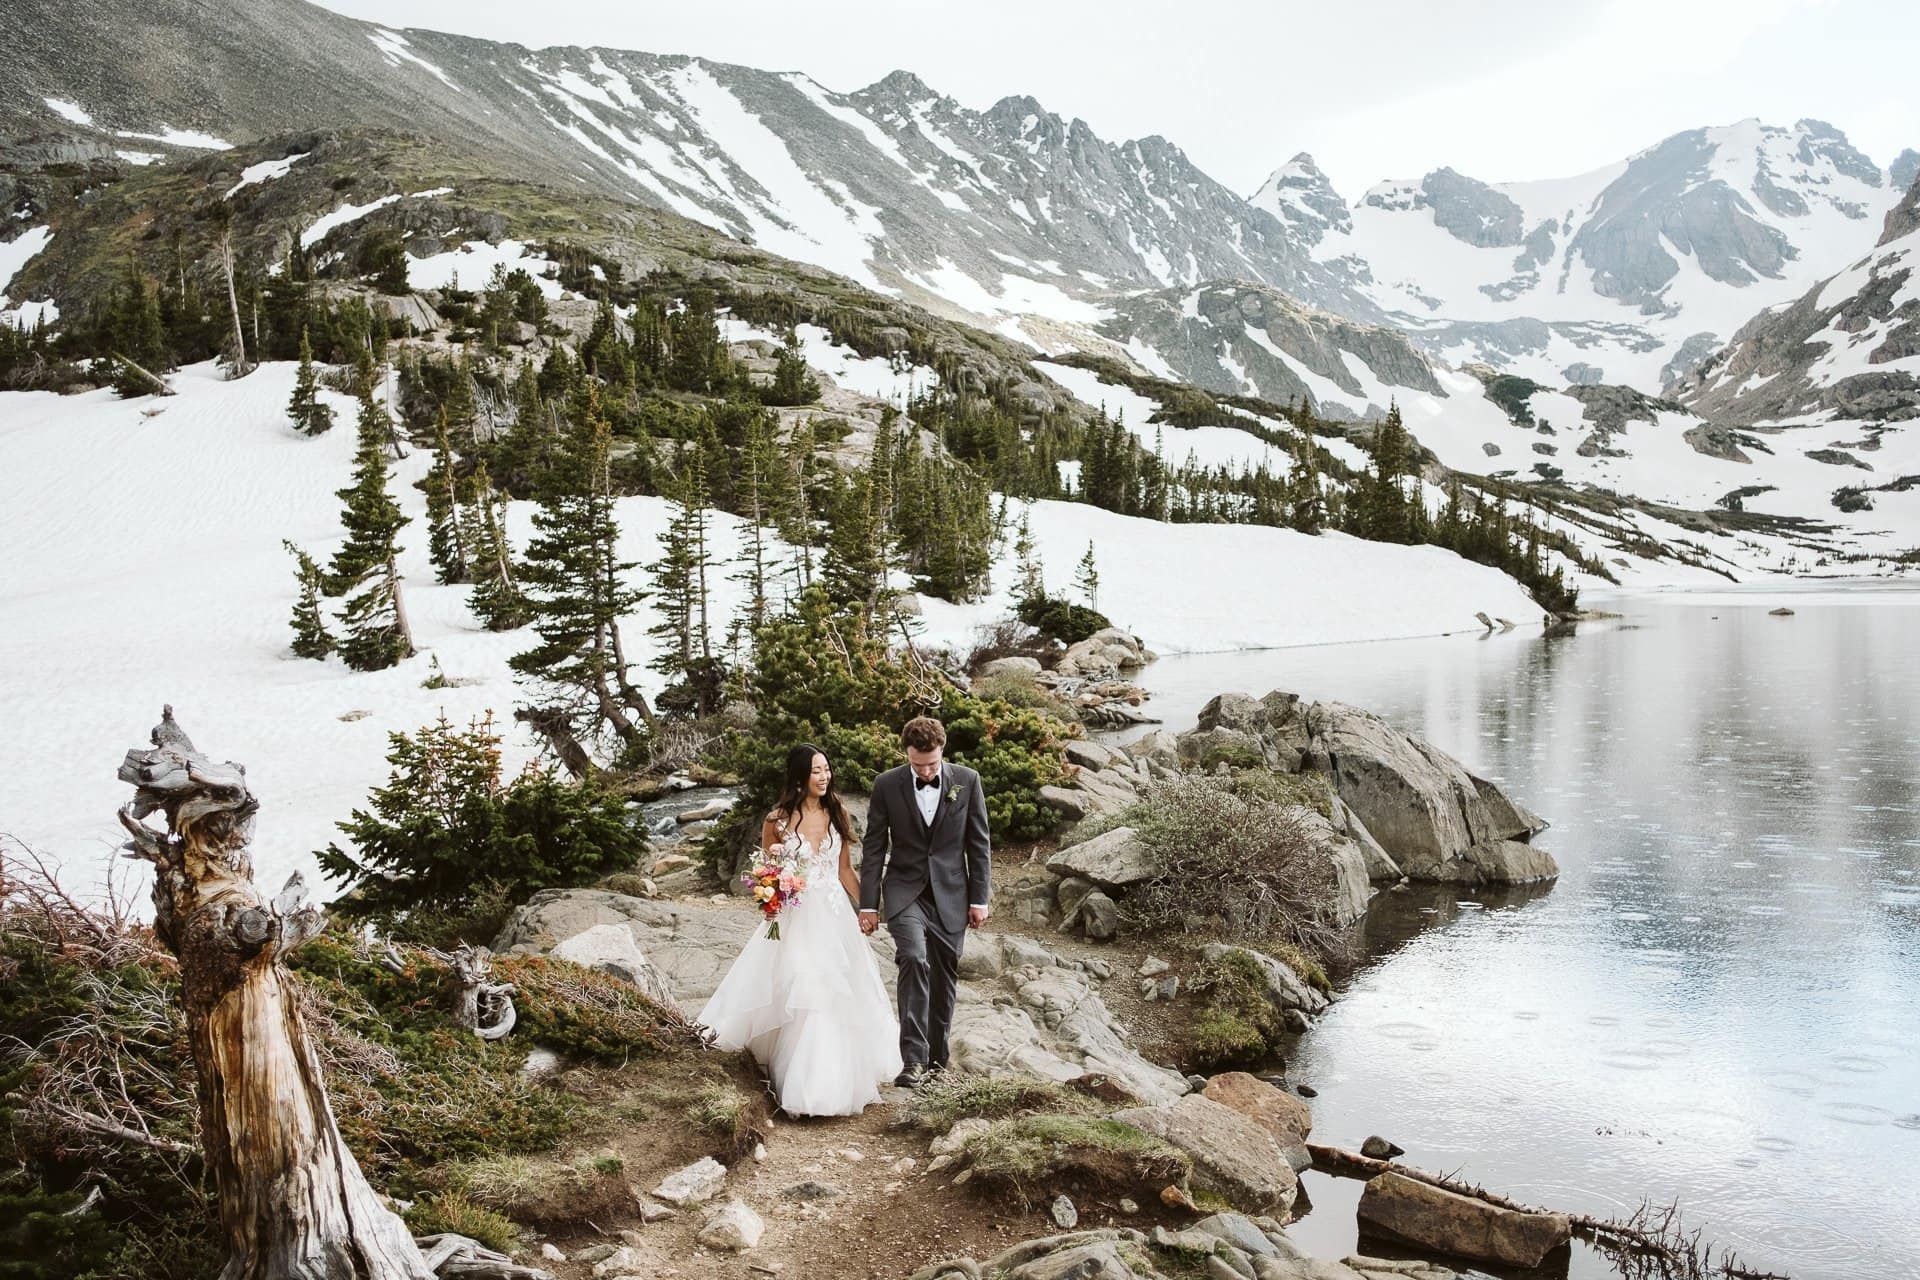 Hiking adventure elopement in the Colorado mountains, Boulder wedding photographer, Indian Peaks Wilderness elopement